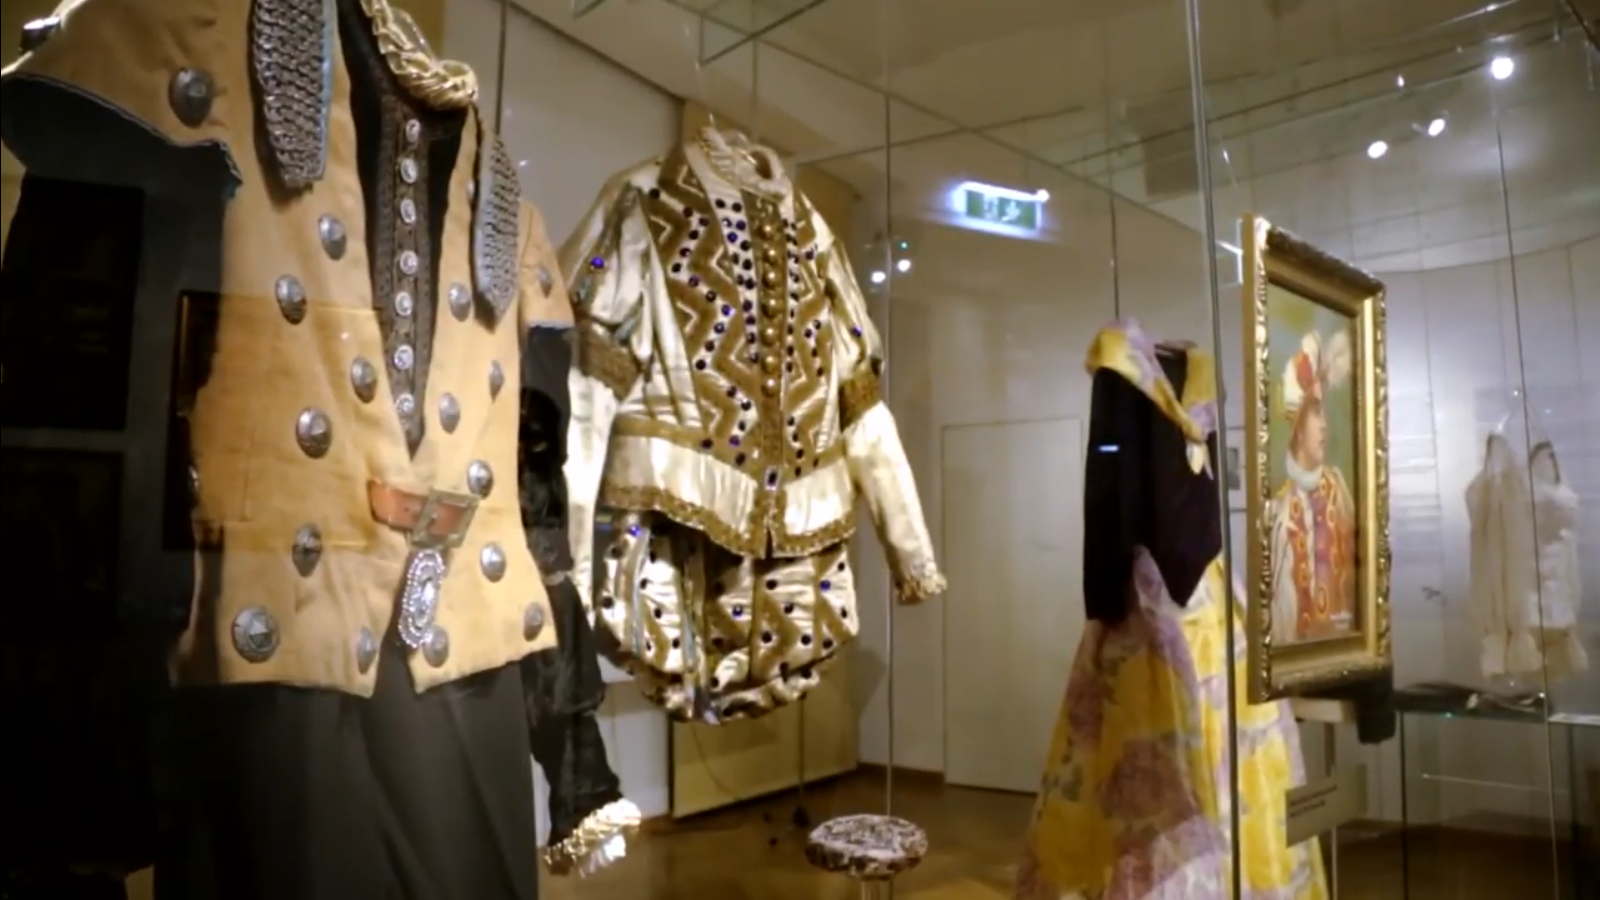 Jan Kiepura's costumes on display in Vienna at the new exhibition. (Photo: Screenshot)